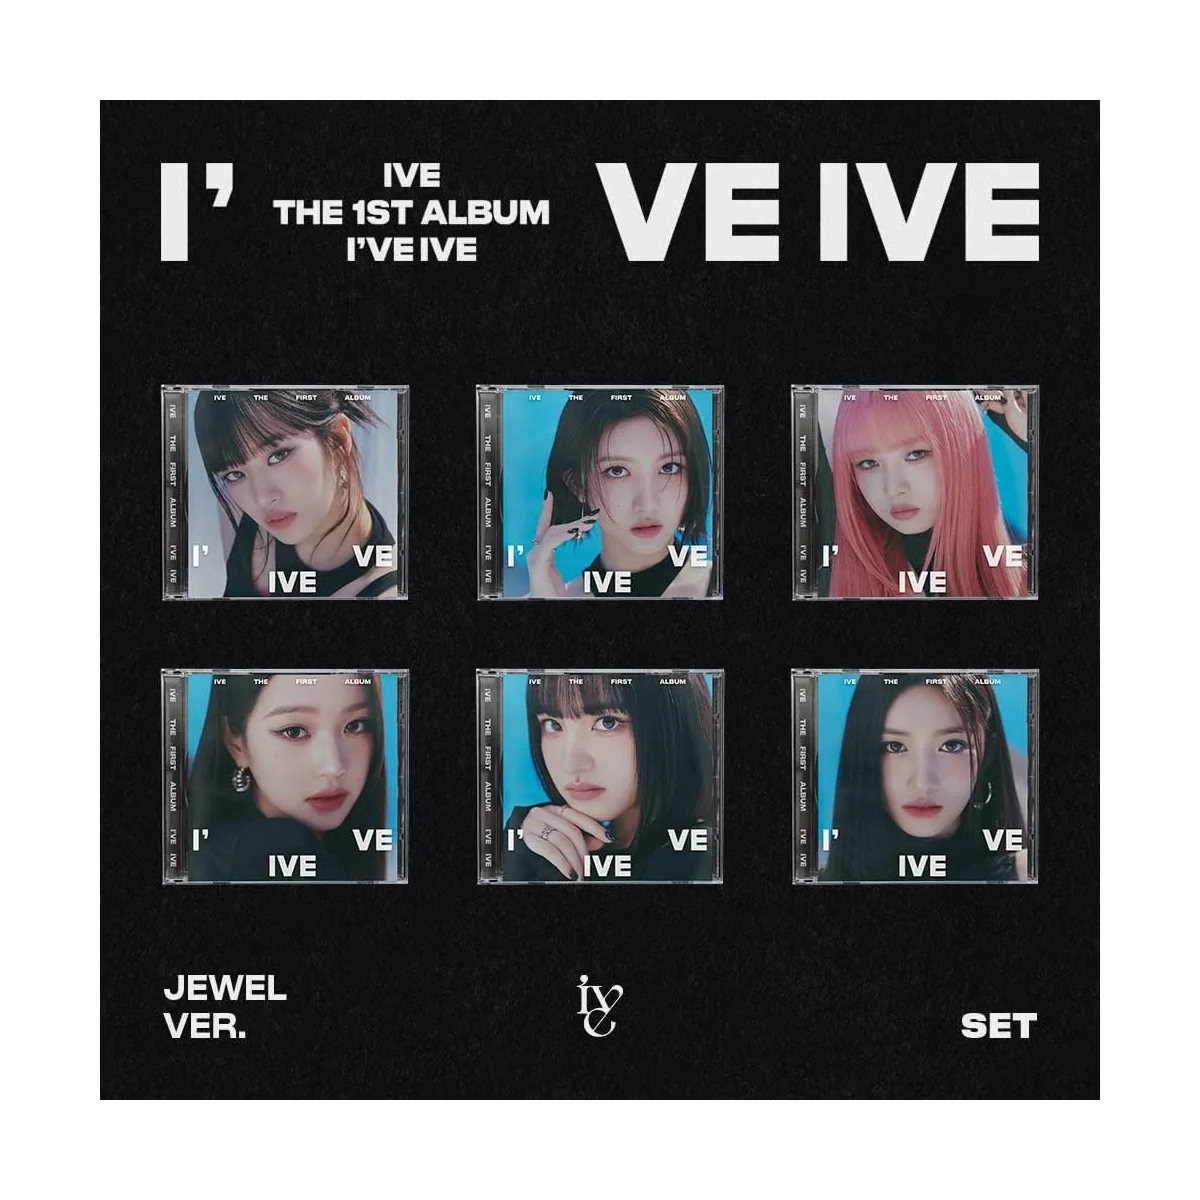 IVE - I've IVE (Jewel Version) (1st Album) 